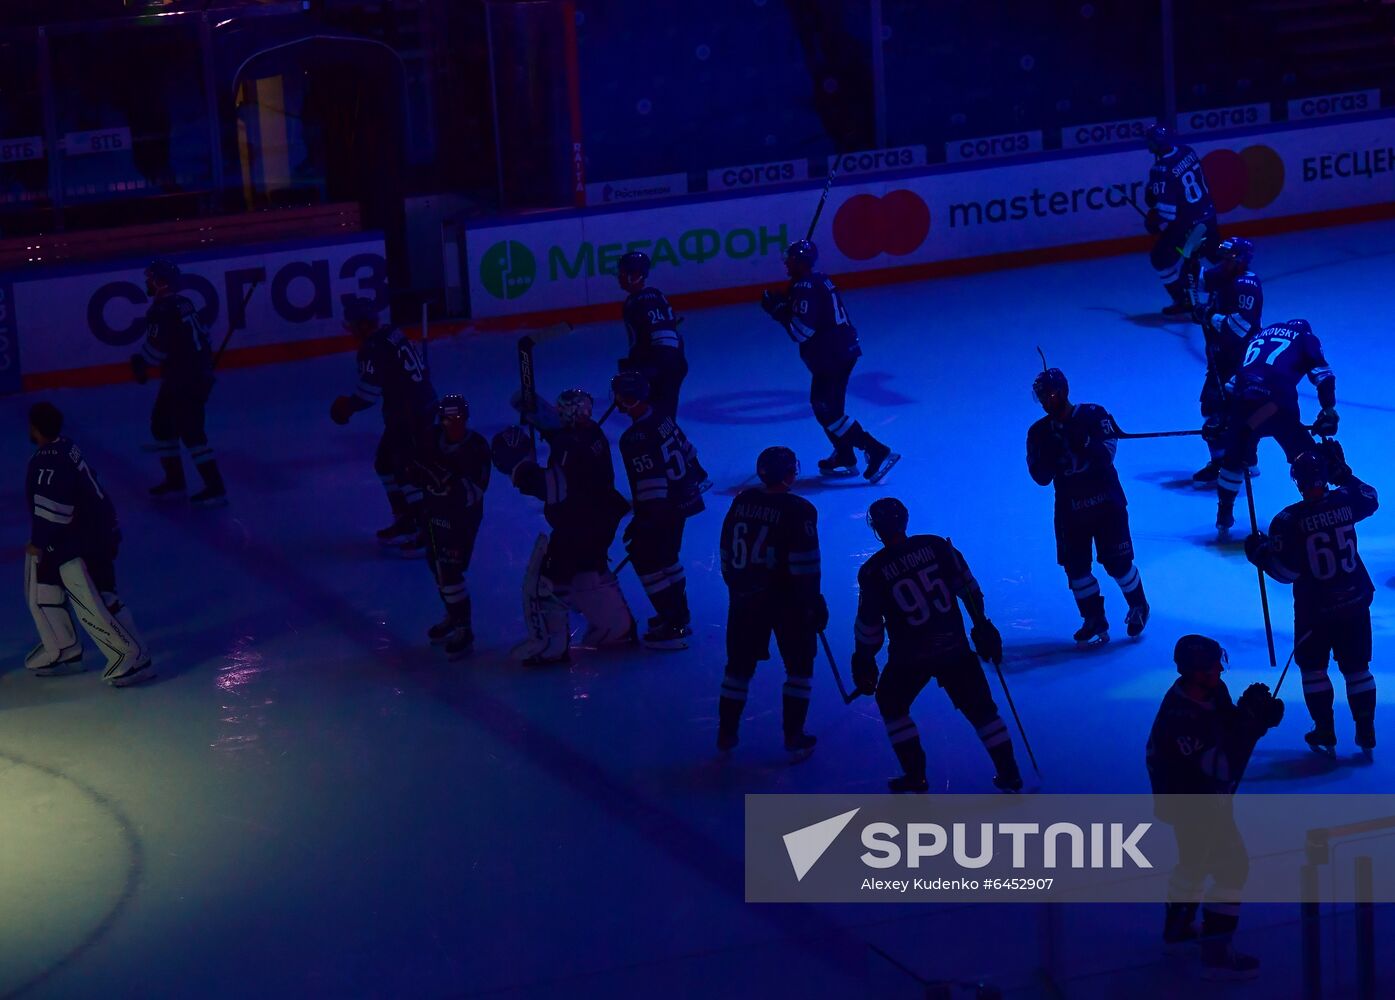 Russia Ice Hockey Dynamo - Jokerit